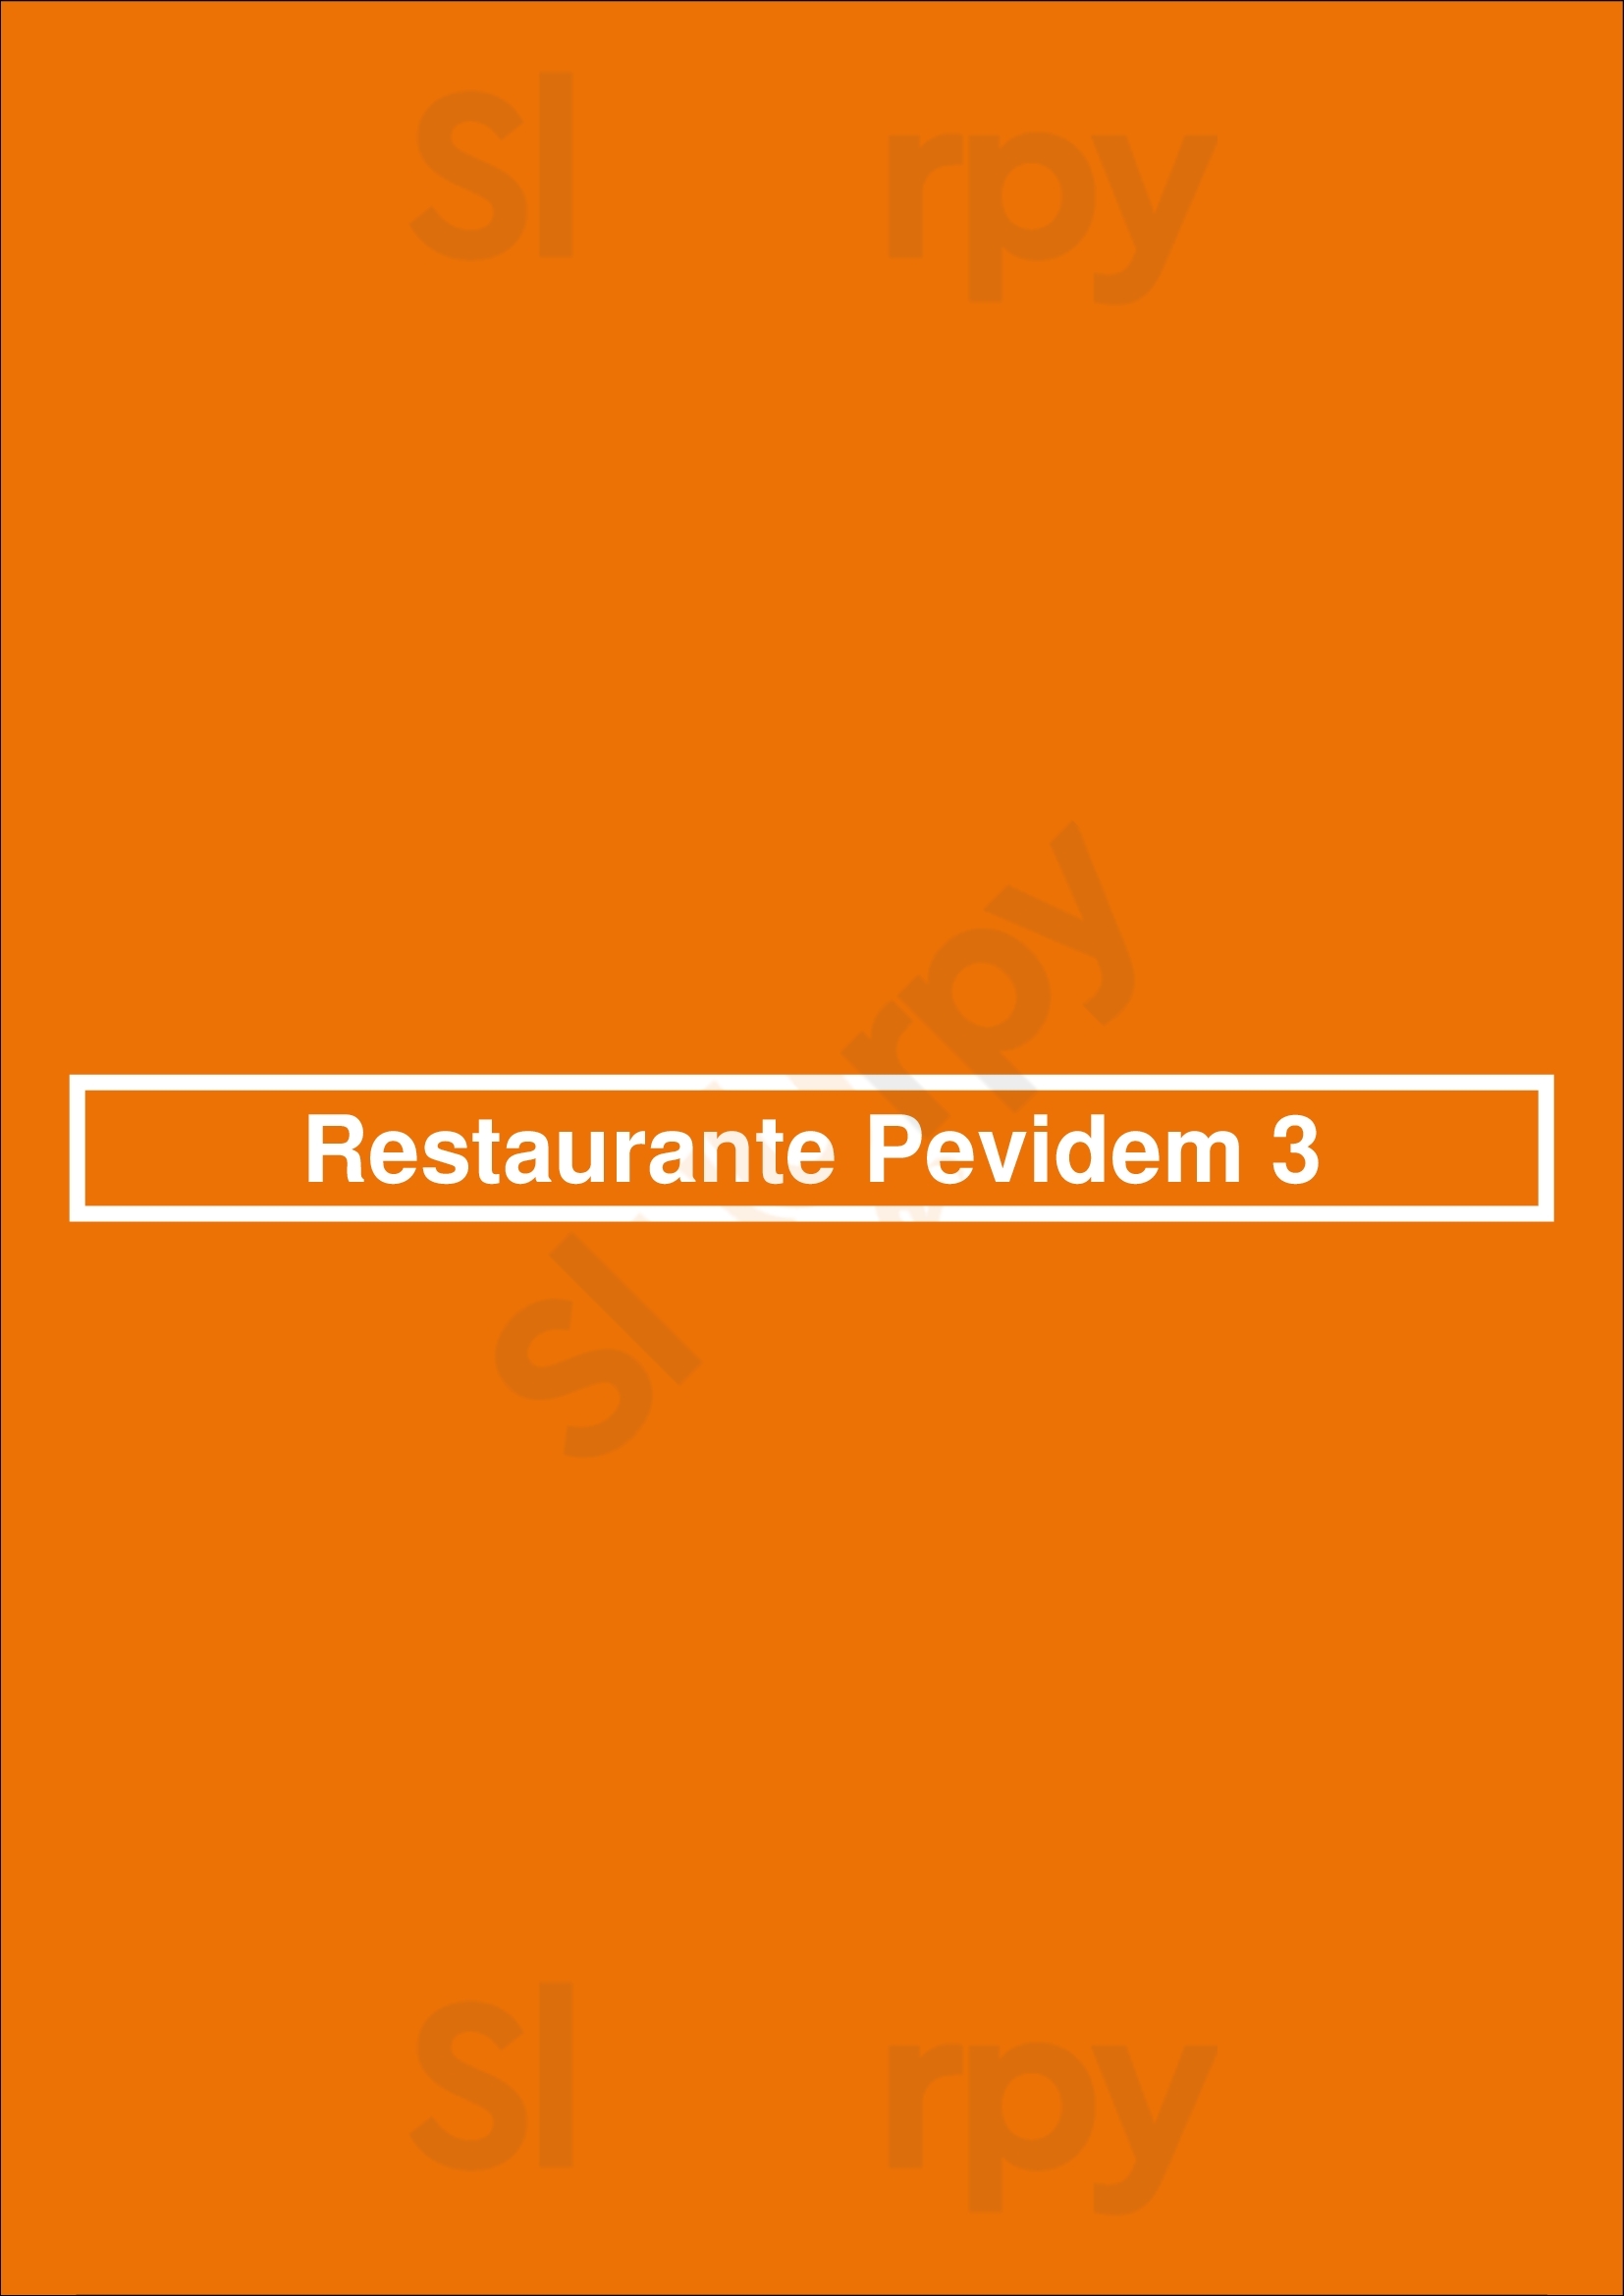 Restaurante Pevidém 3 Braga Menu - 1